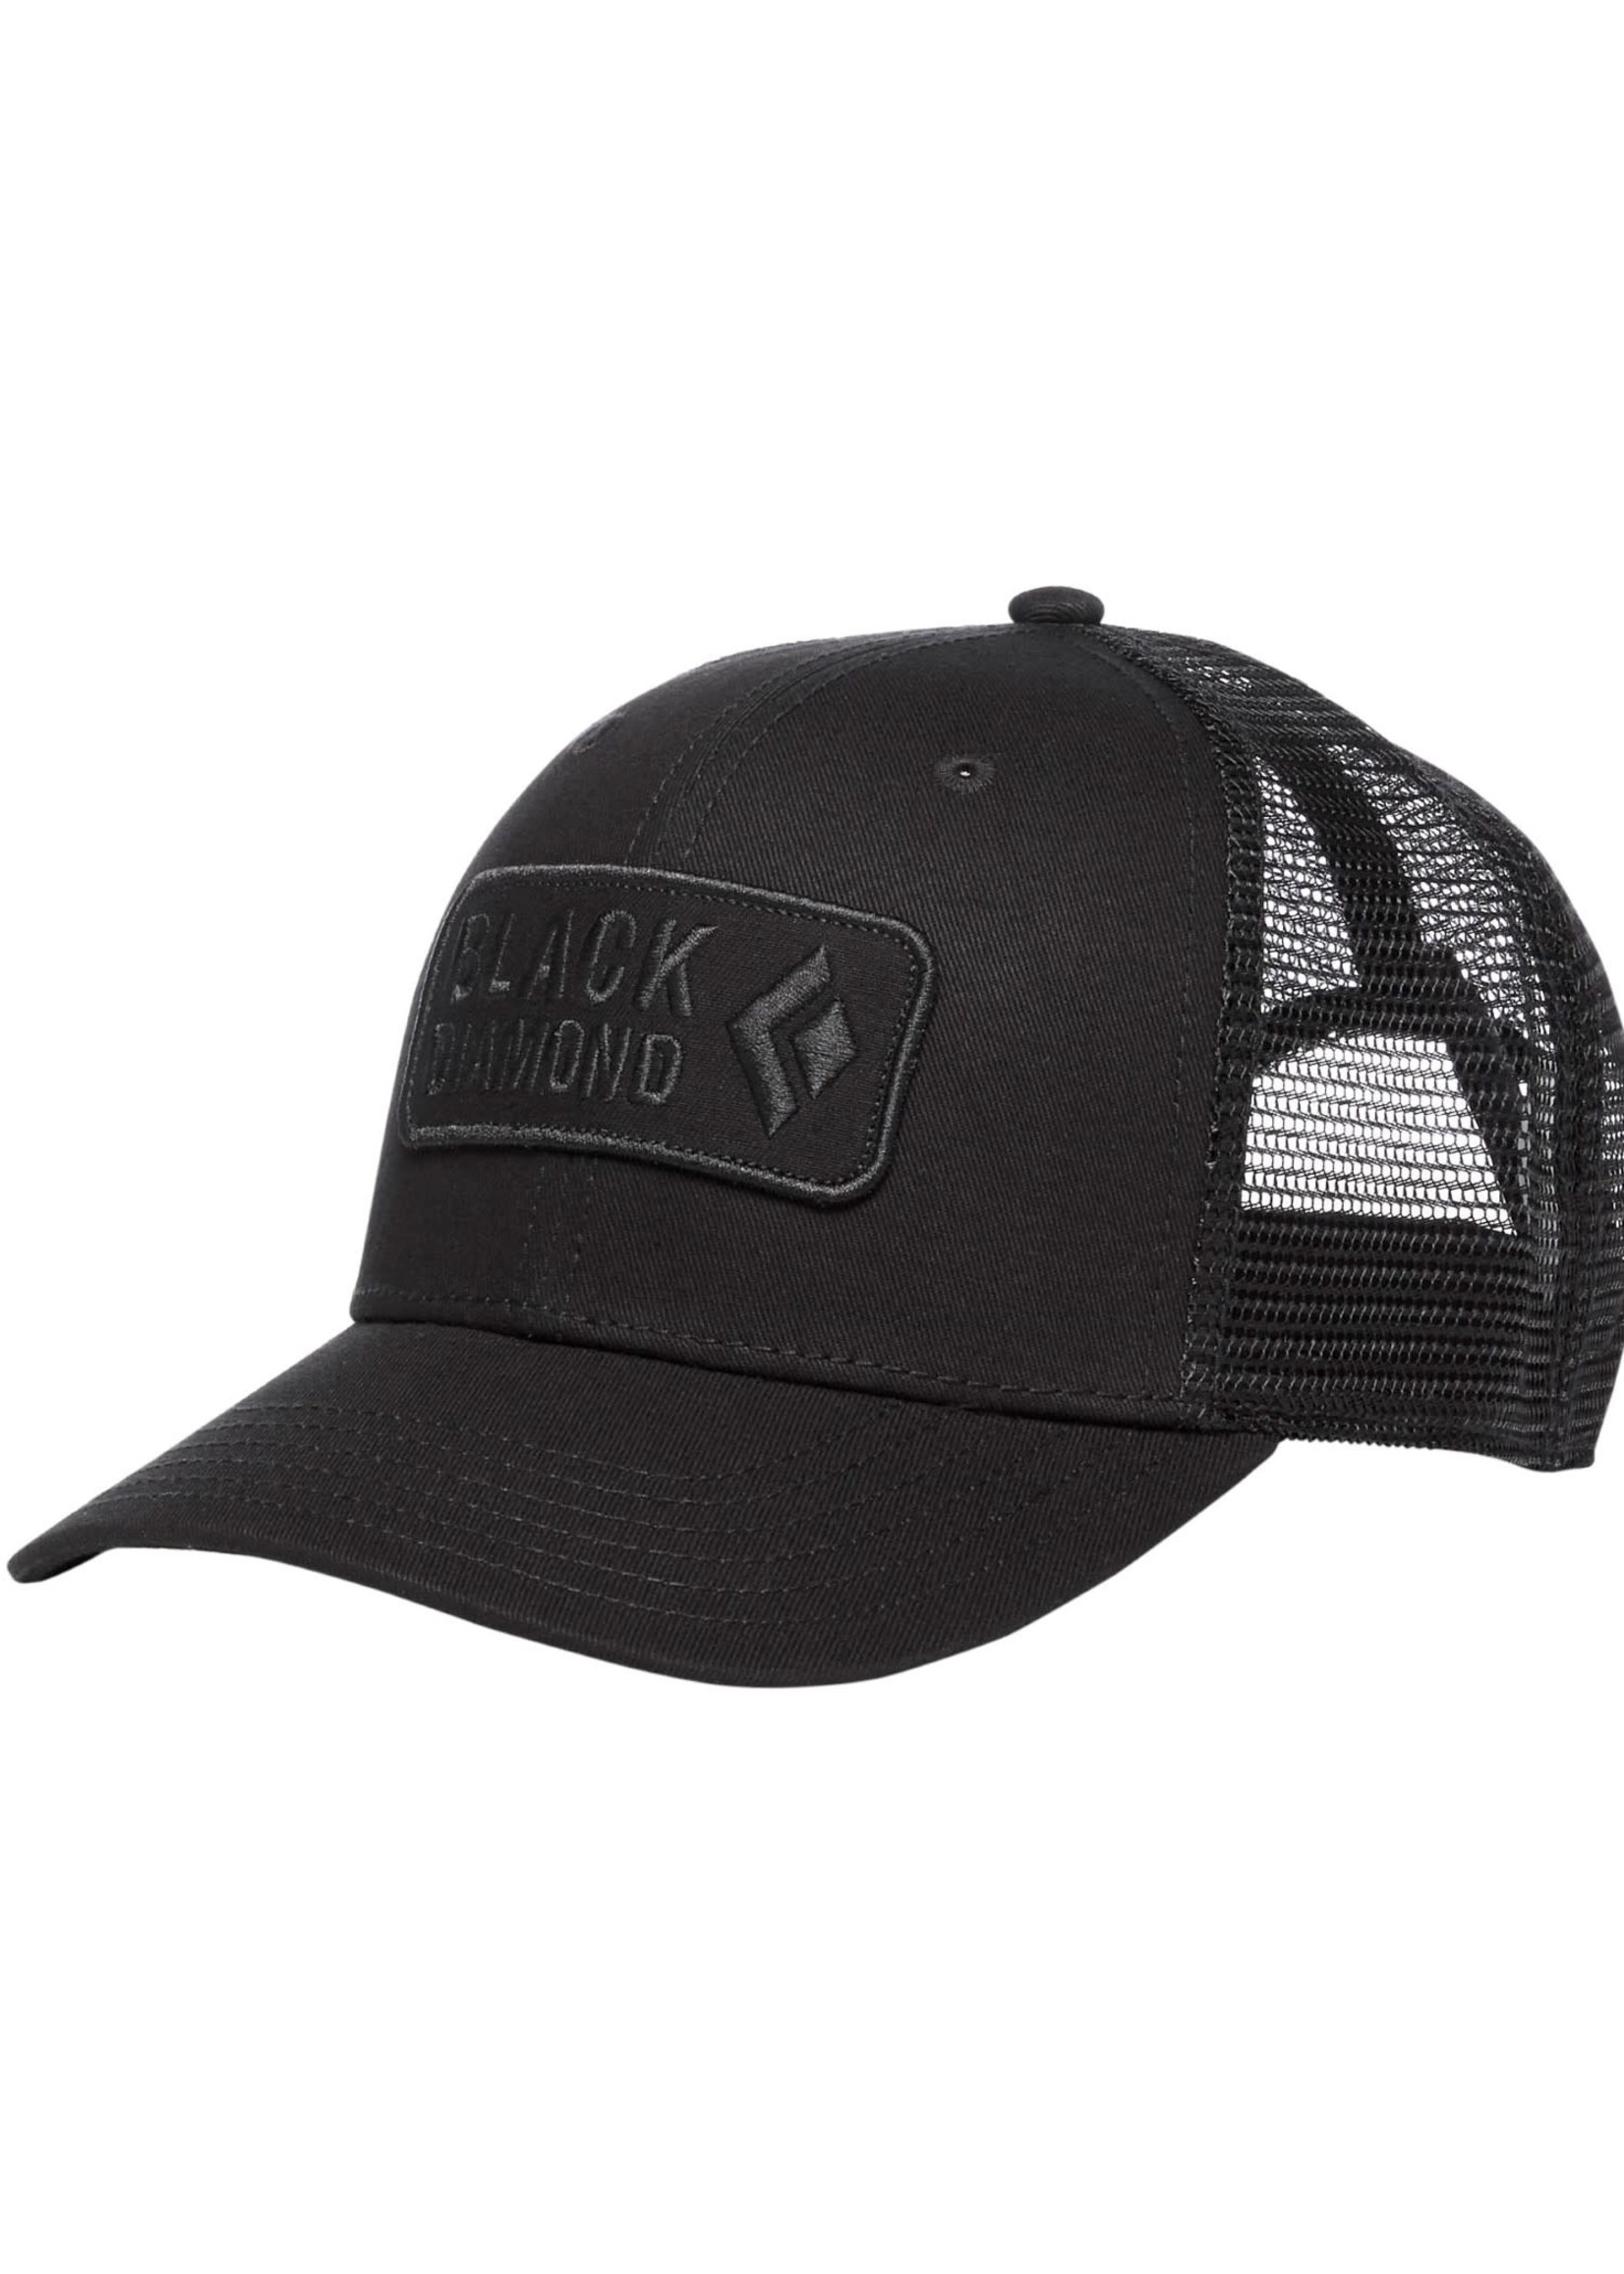 Black Diamond Black Diamond Trucker Hat - Men